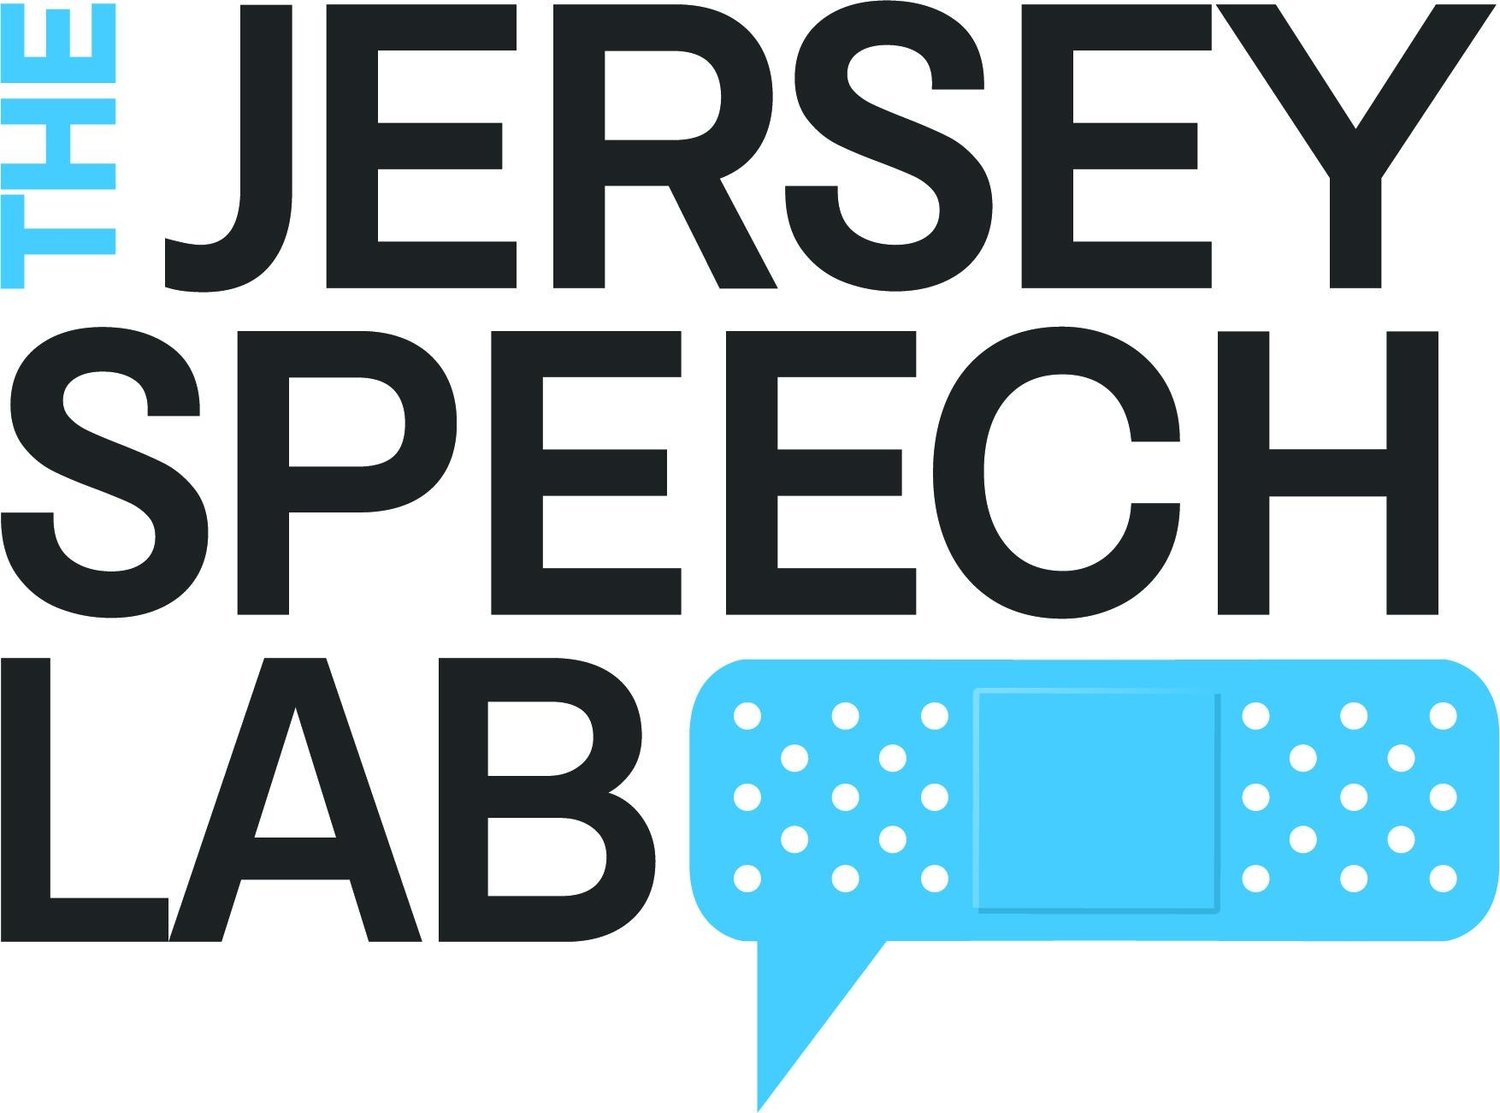 The Jersey Speech Lab